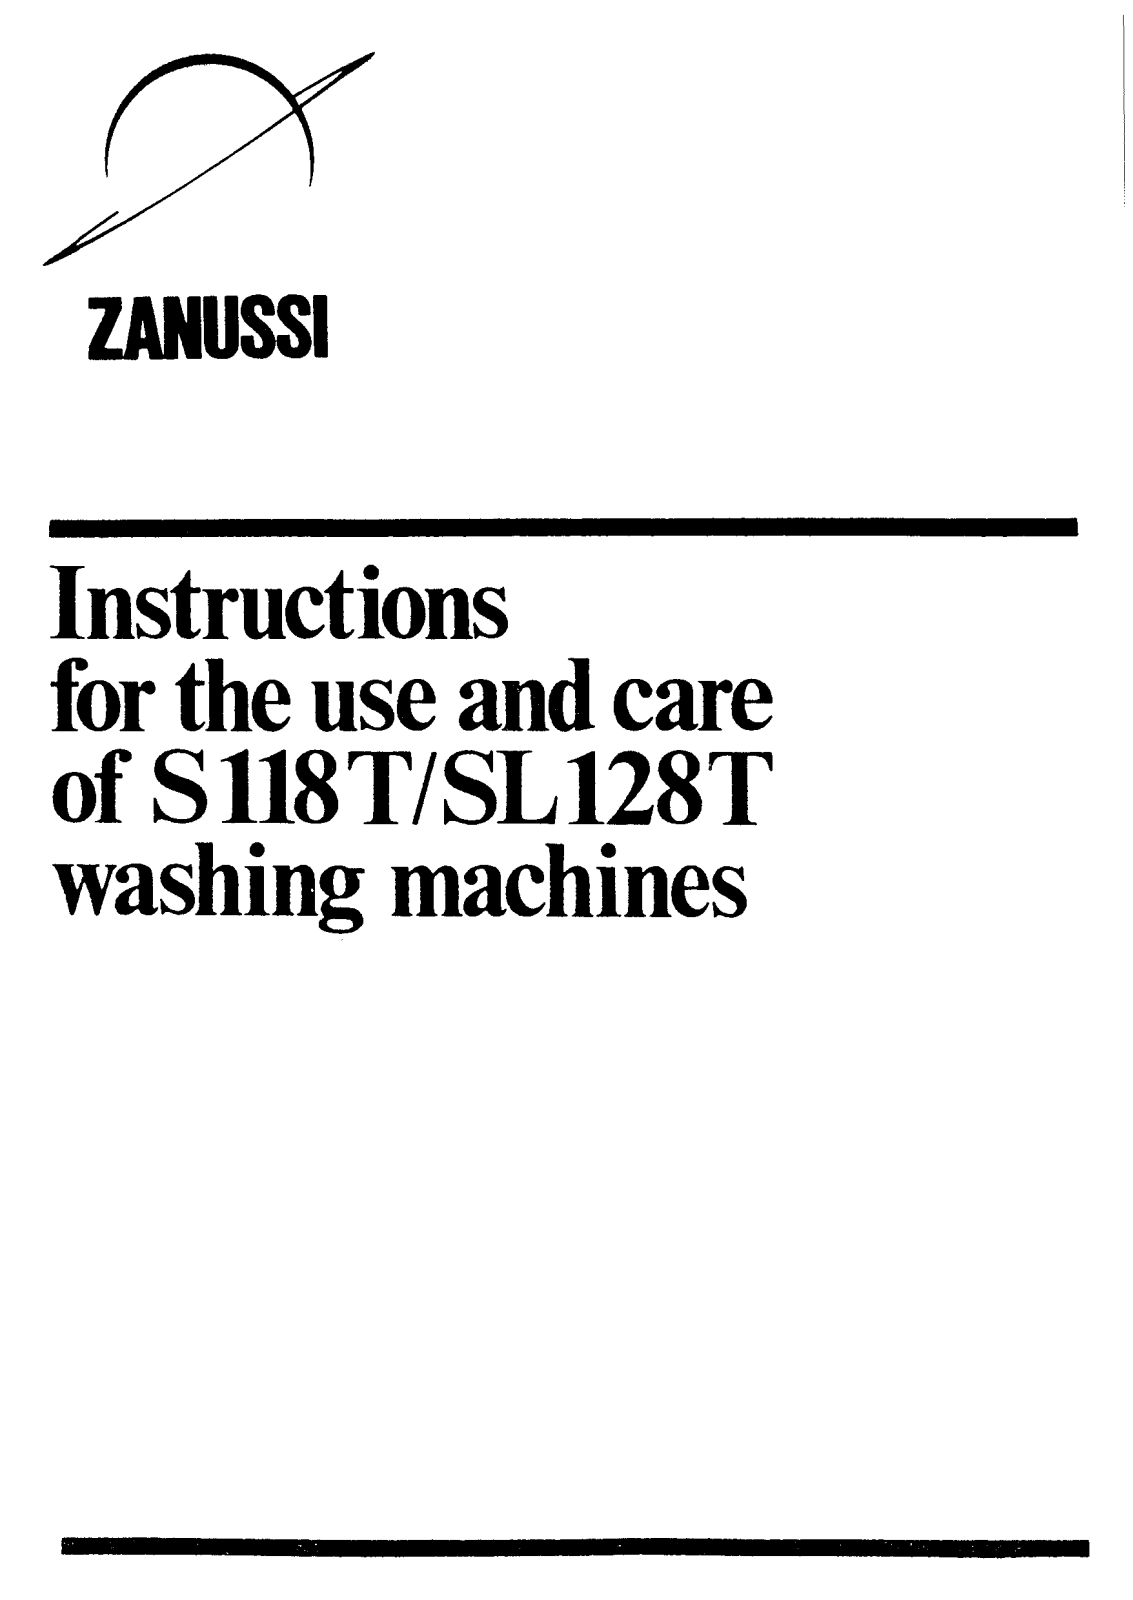 Zanussi SL 128T, S 118T User Manual